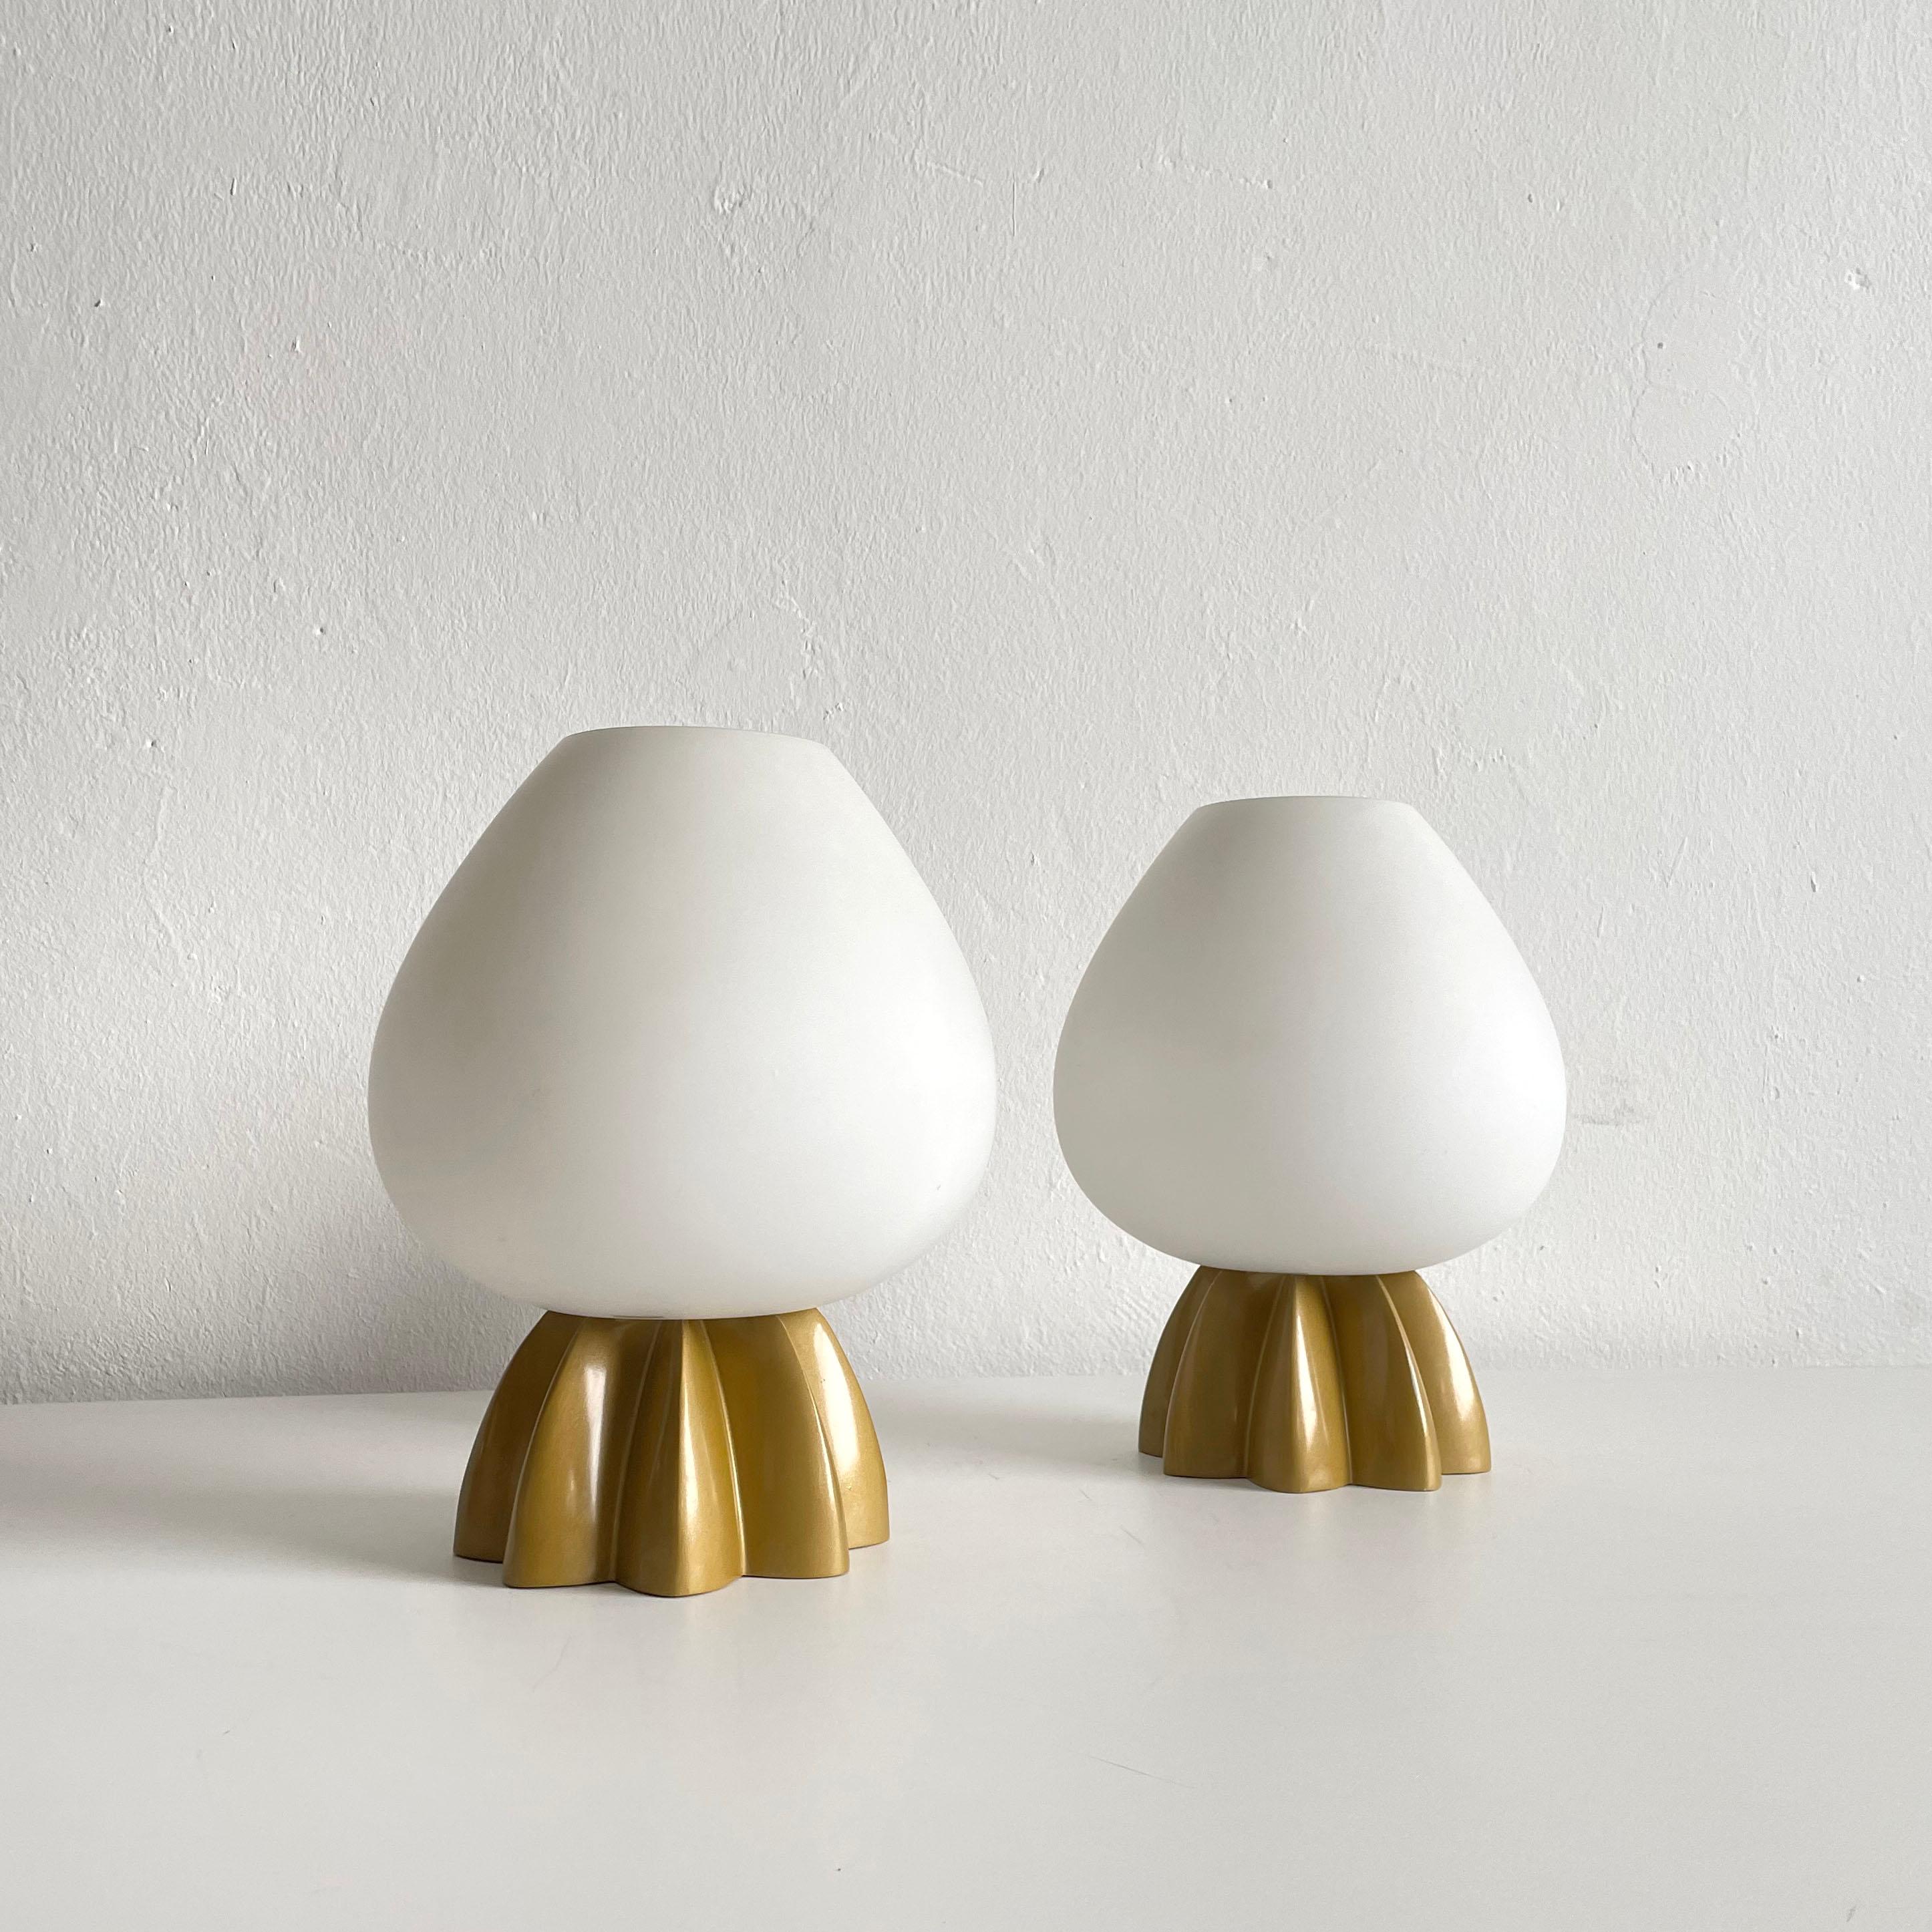 Set of 2 Foscarini Table Lamps, Model Fruits by Rodolfo Dordoni, Italy, 1980s For Sale 13